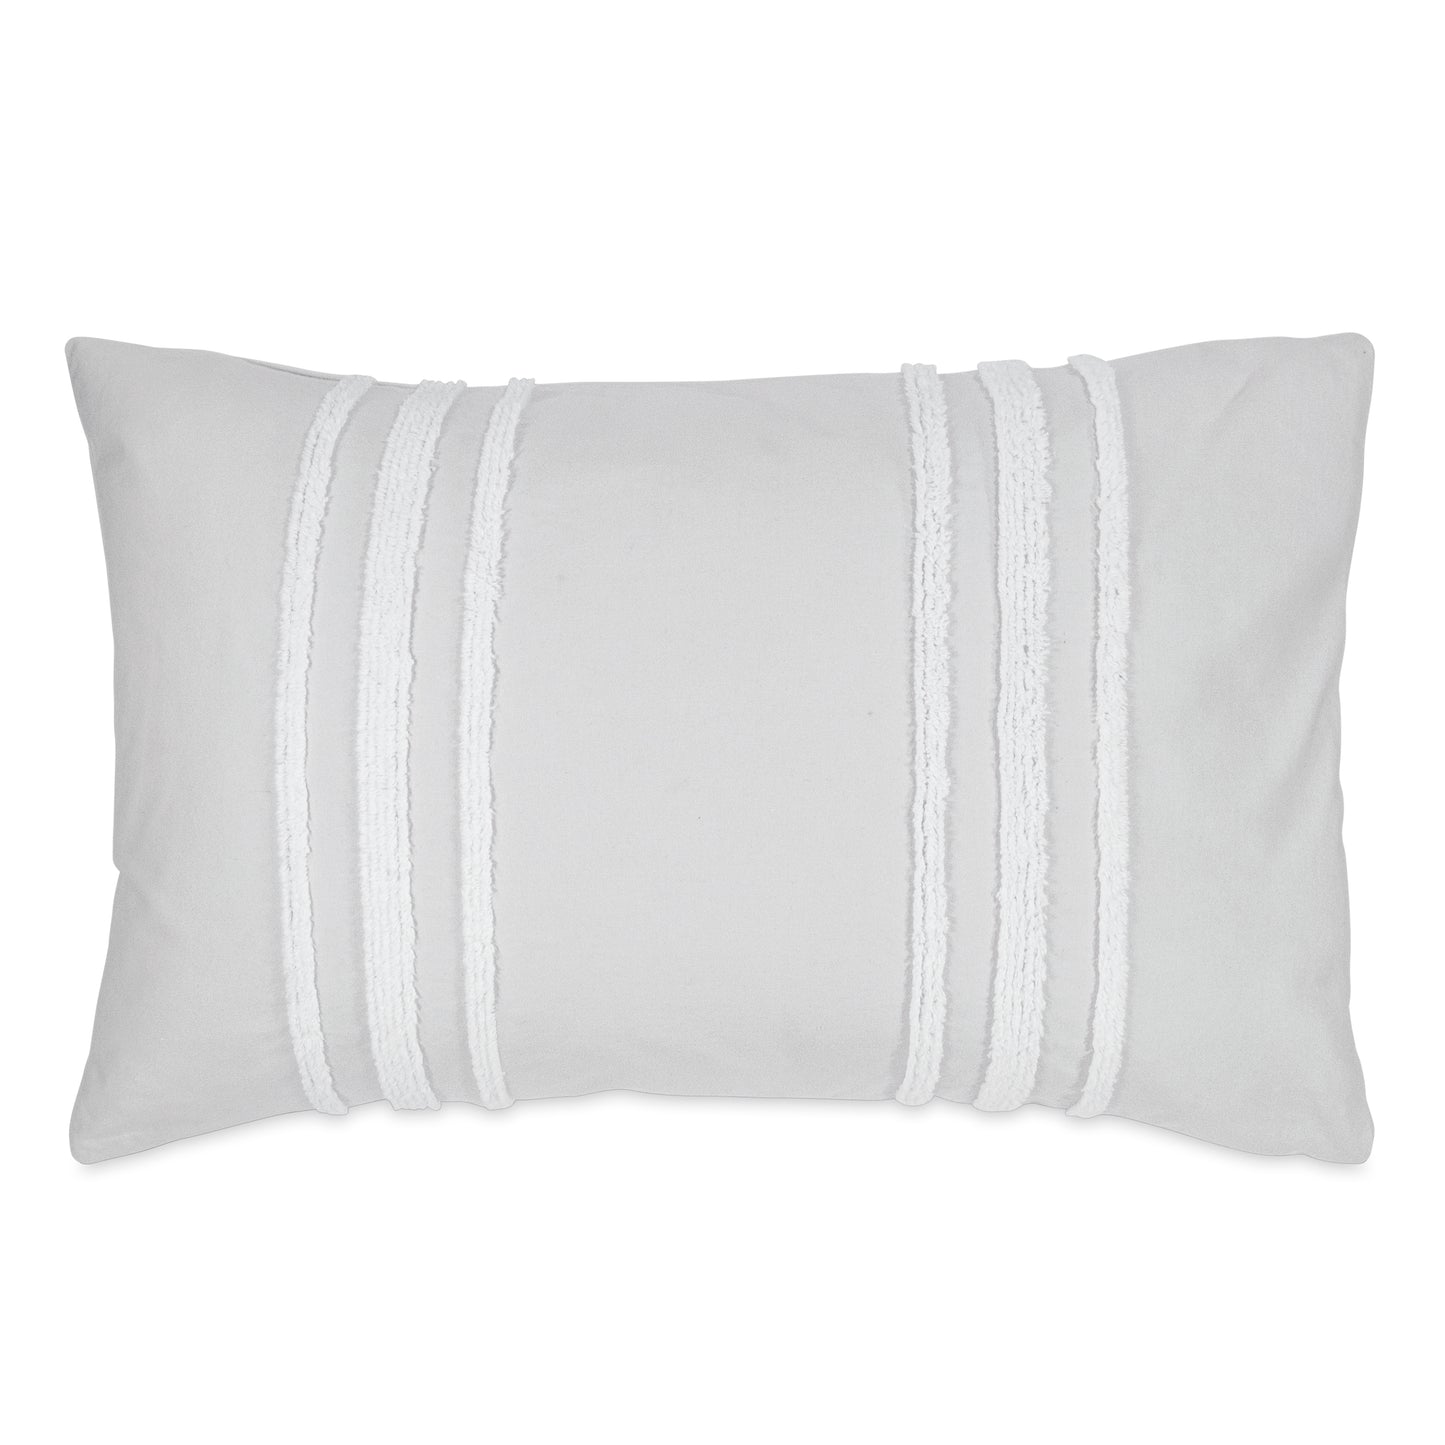 DKNY Chenille Stripe Bedding Comforter Set Sham